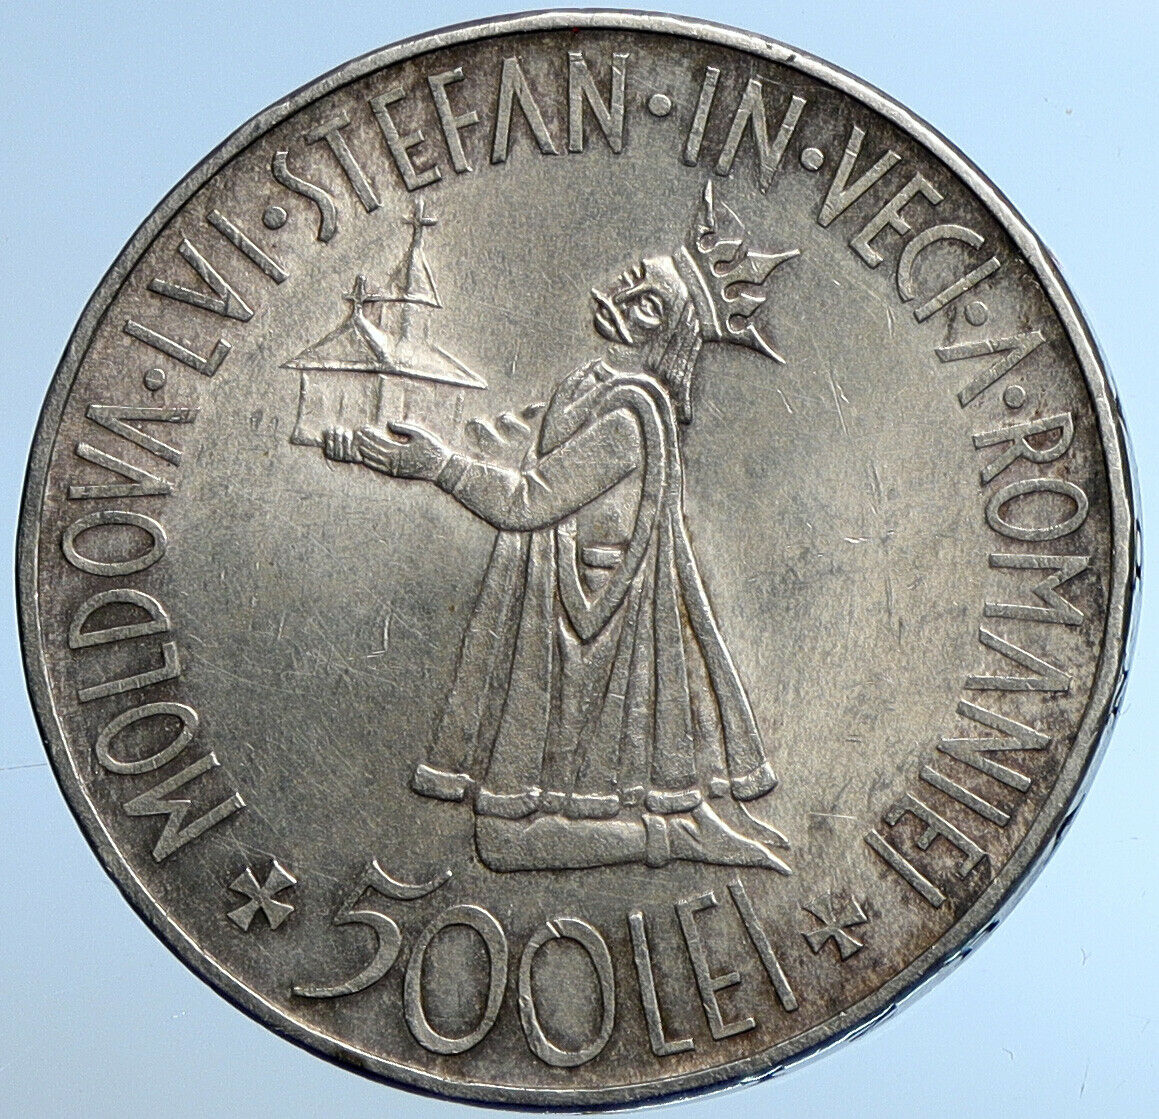 1941 ROMANIA Michael I Antique VINTAGE OLD Silver 500 LEI Romanian Coin i109629